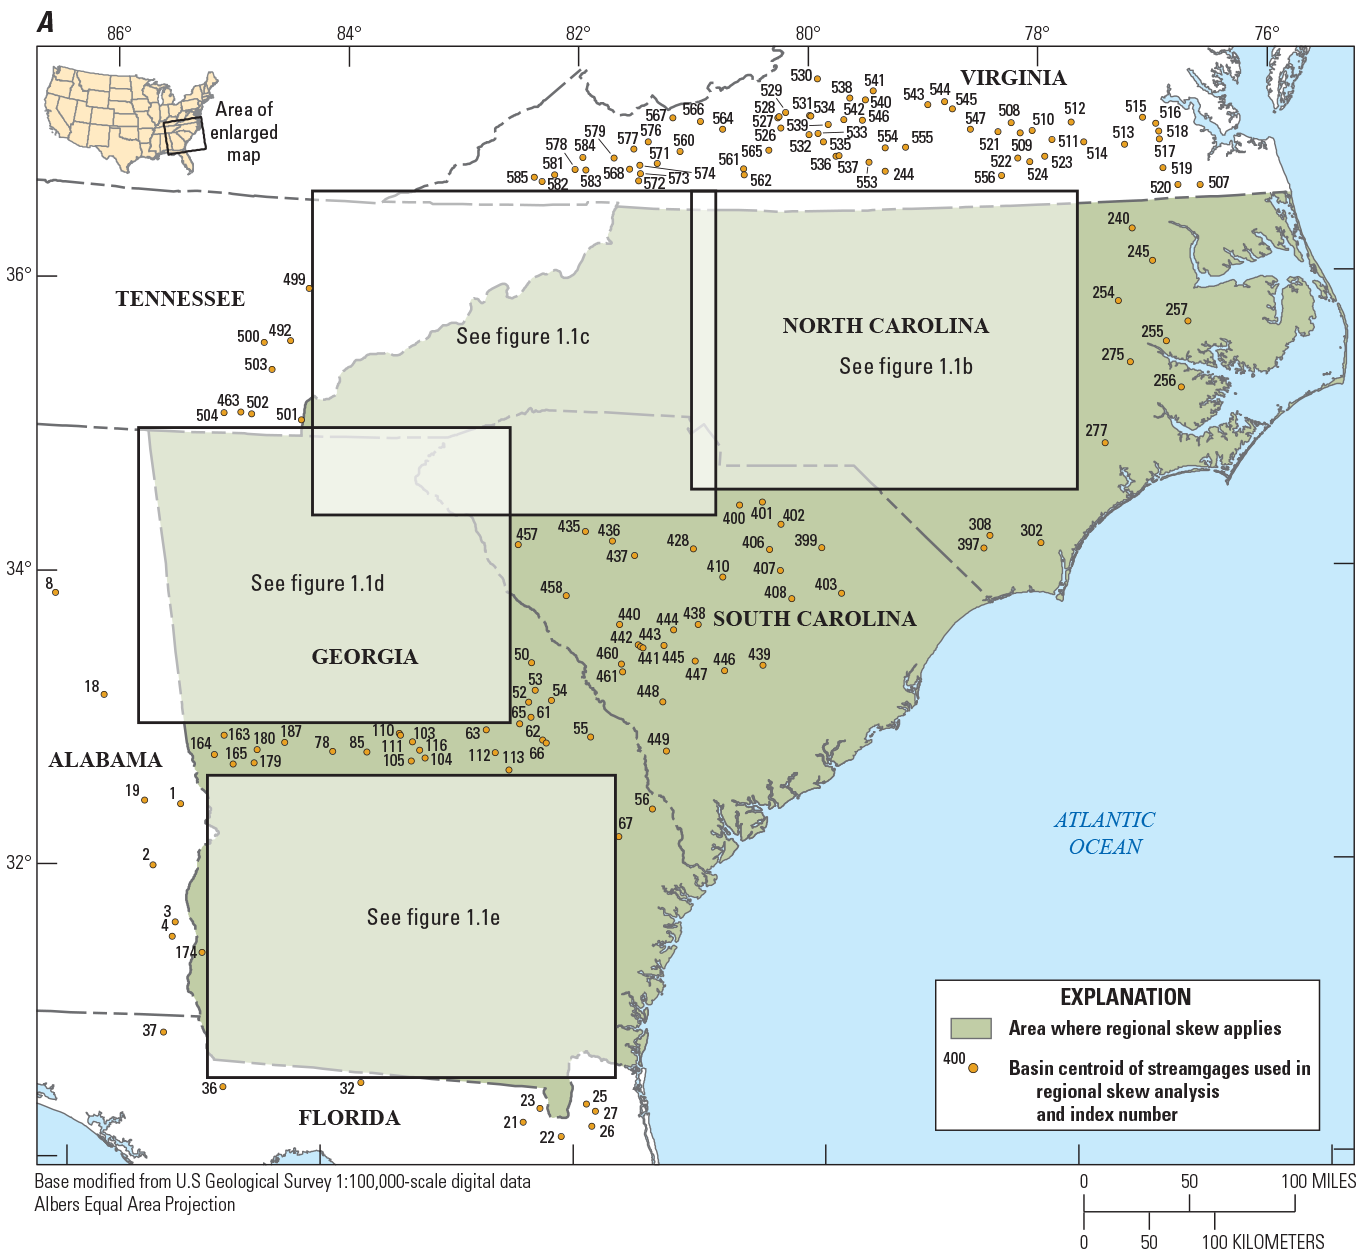 5 maps of drainage basins of U.S. Geological Survey streamgages in Alabama, Florida,
                  Georgia, North Carolina, South Carolina, Tennessee, and Virginia that were used for
                  regional skew analysis.